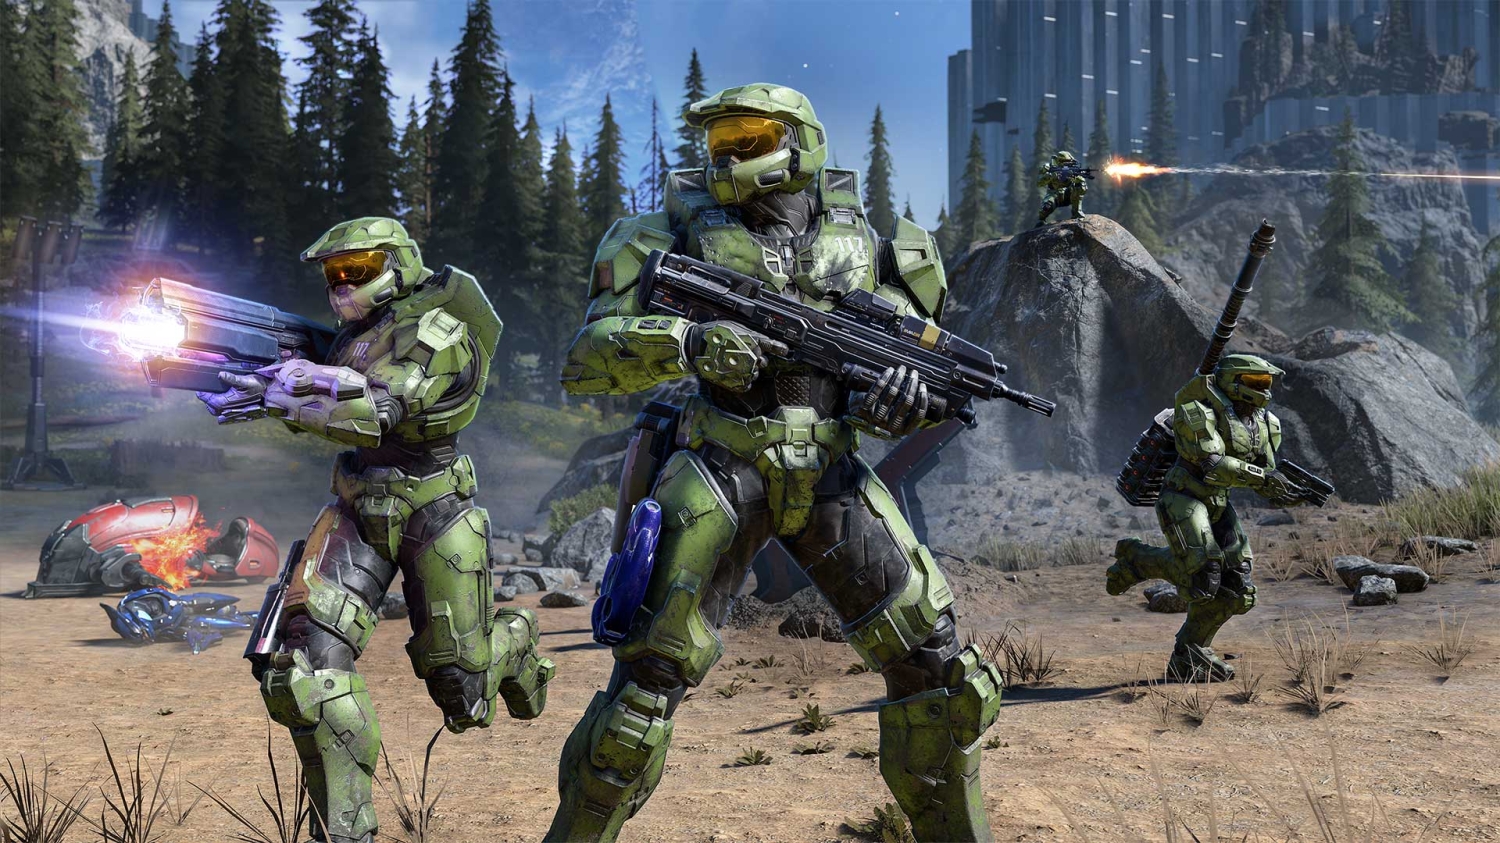 Ex-Halo 5 dev says 'Microsoft set Halo up for failure'